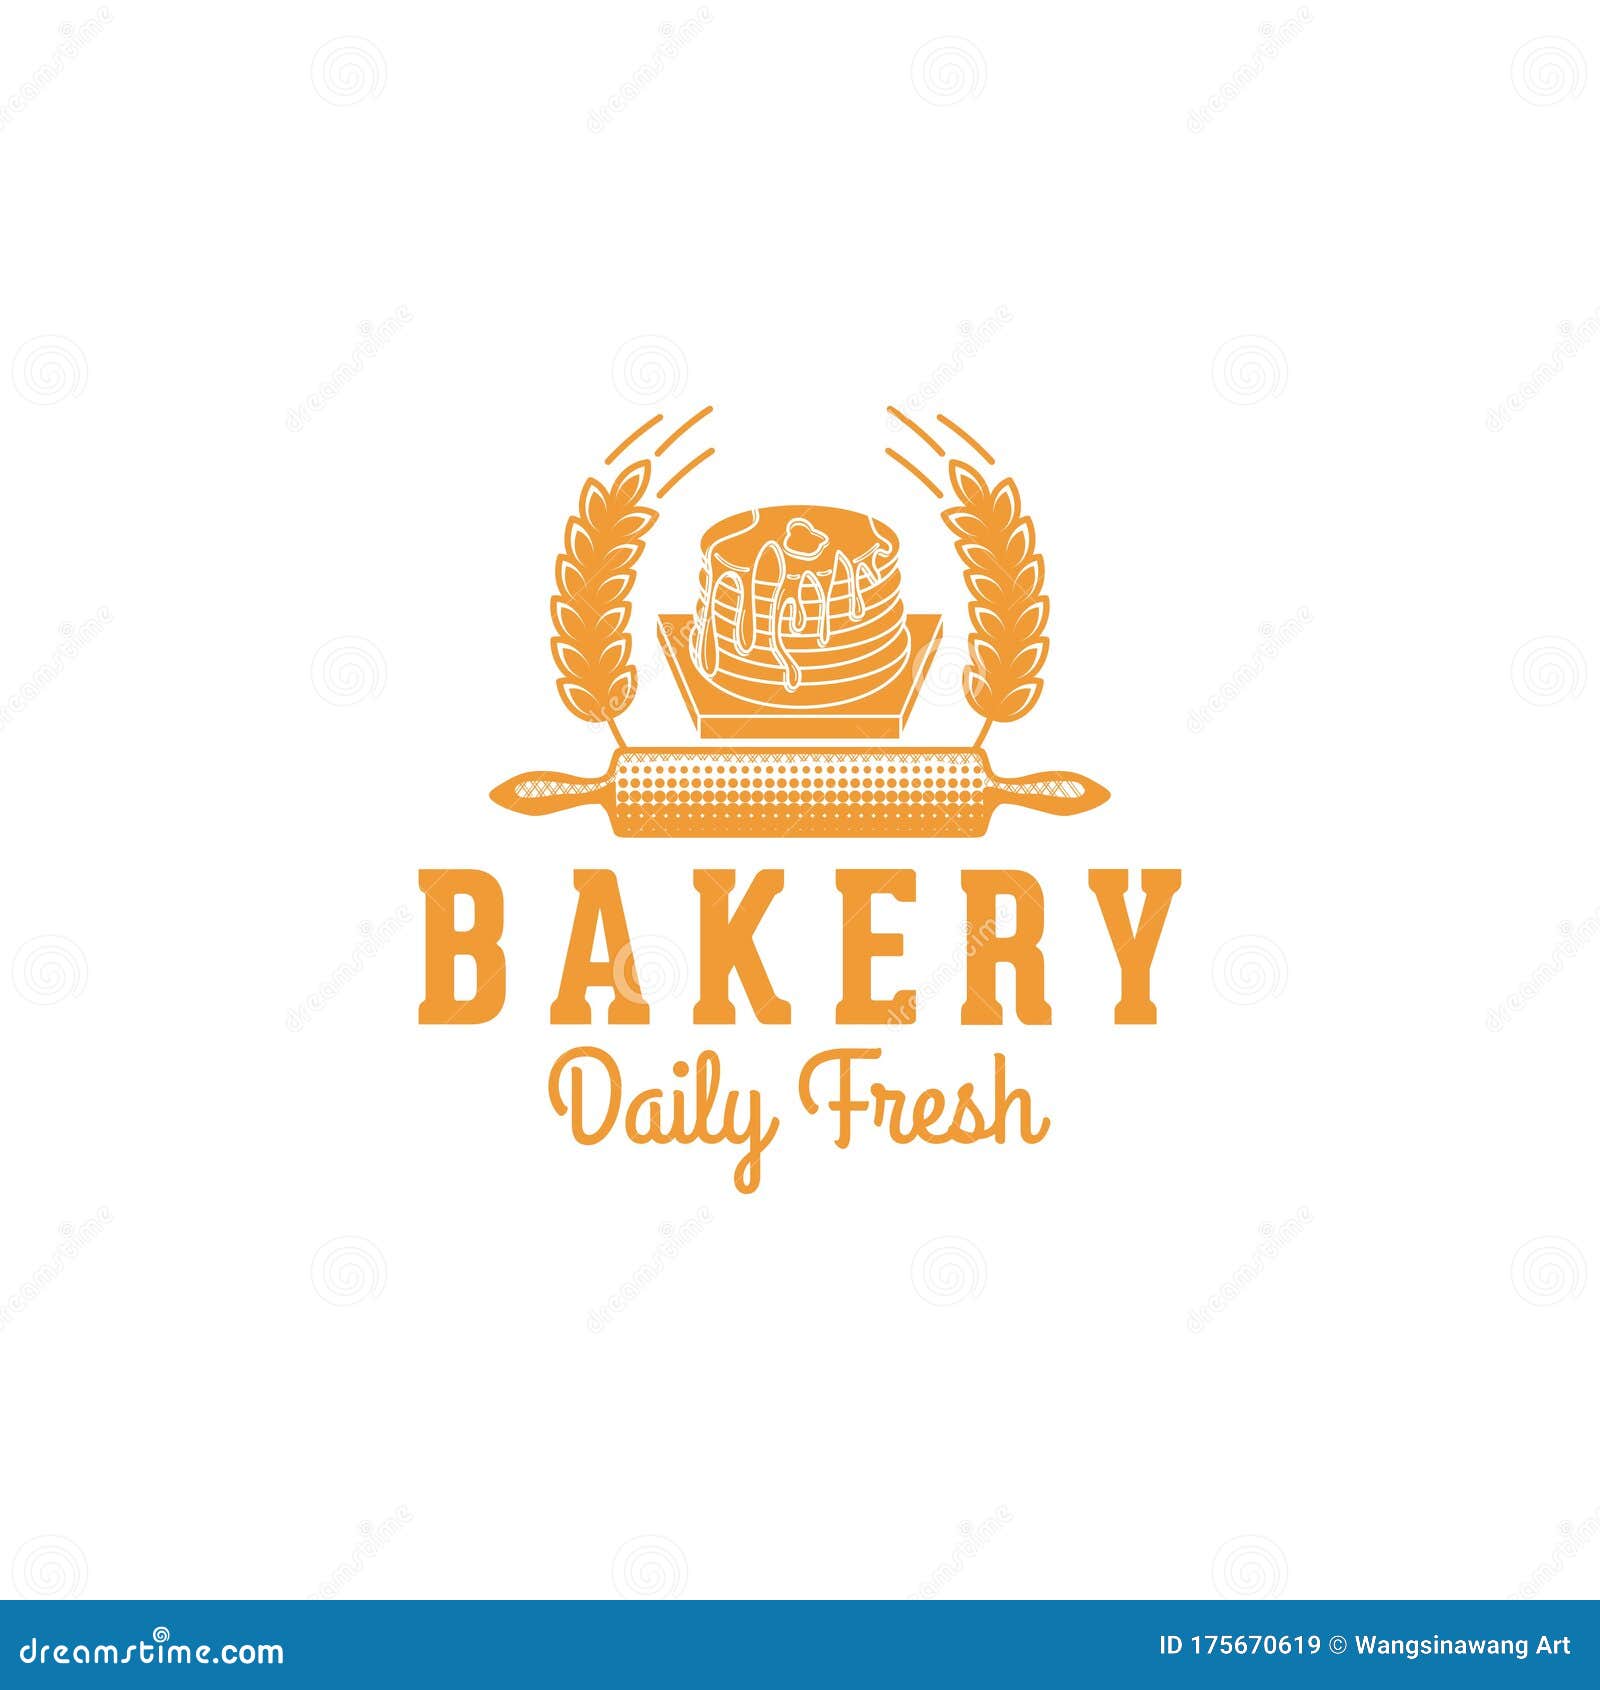 Pancake Vintage Bakery Logo Ideas Inspiration Logo Design Template Vector Illustration Isolated On White Background Stock Vector Illustration Of Creative Breakfast